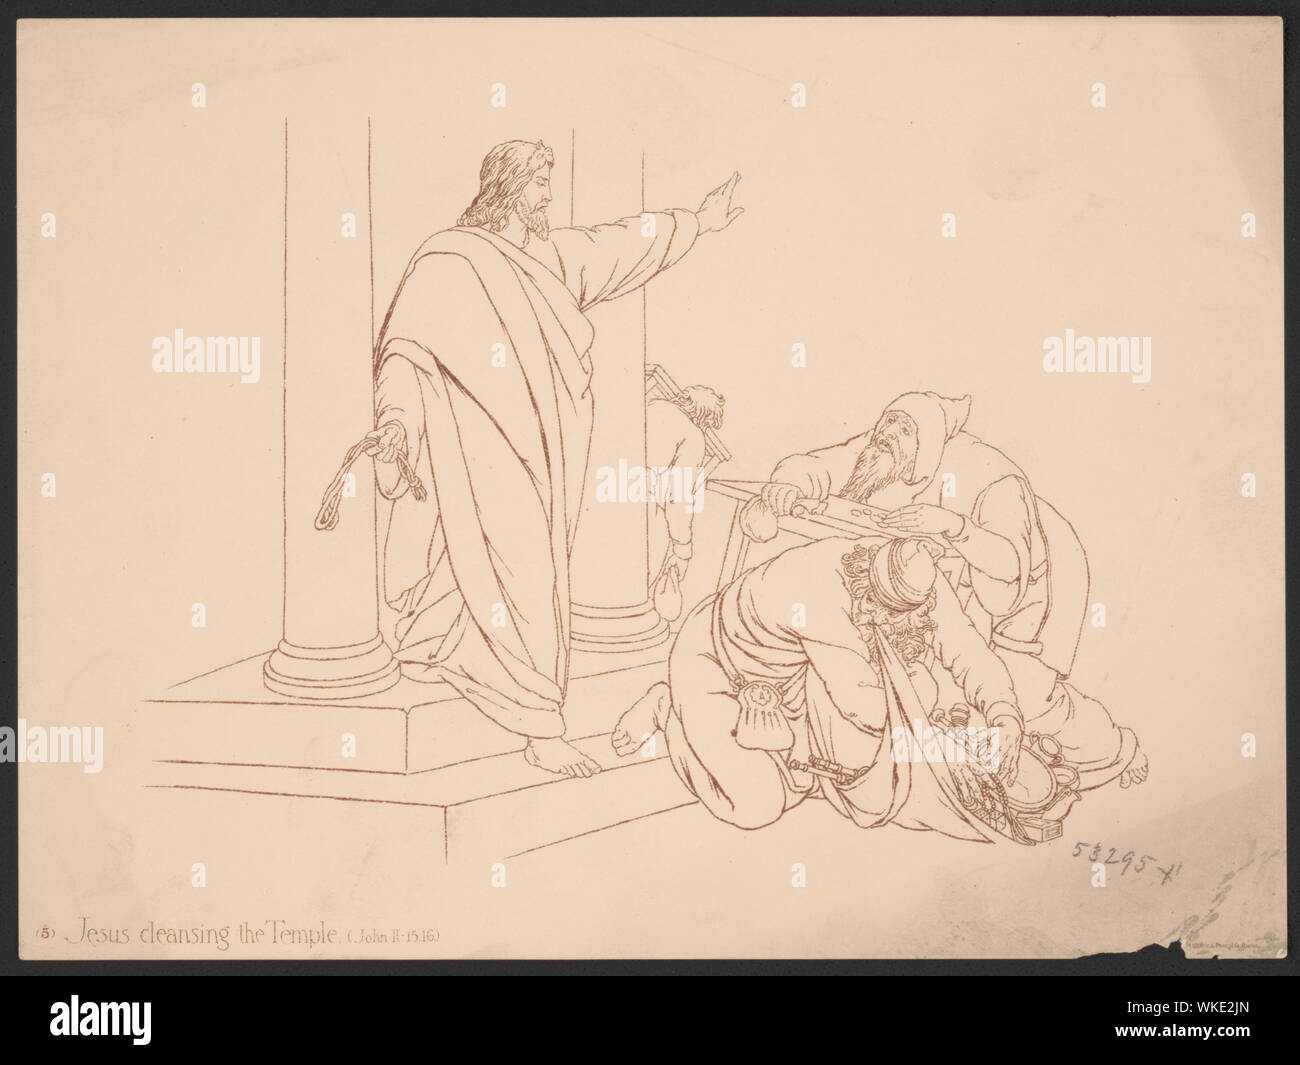 Jesus cleansing the Temple (John II:15,16) Stock Photo